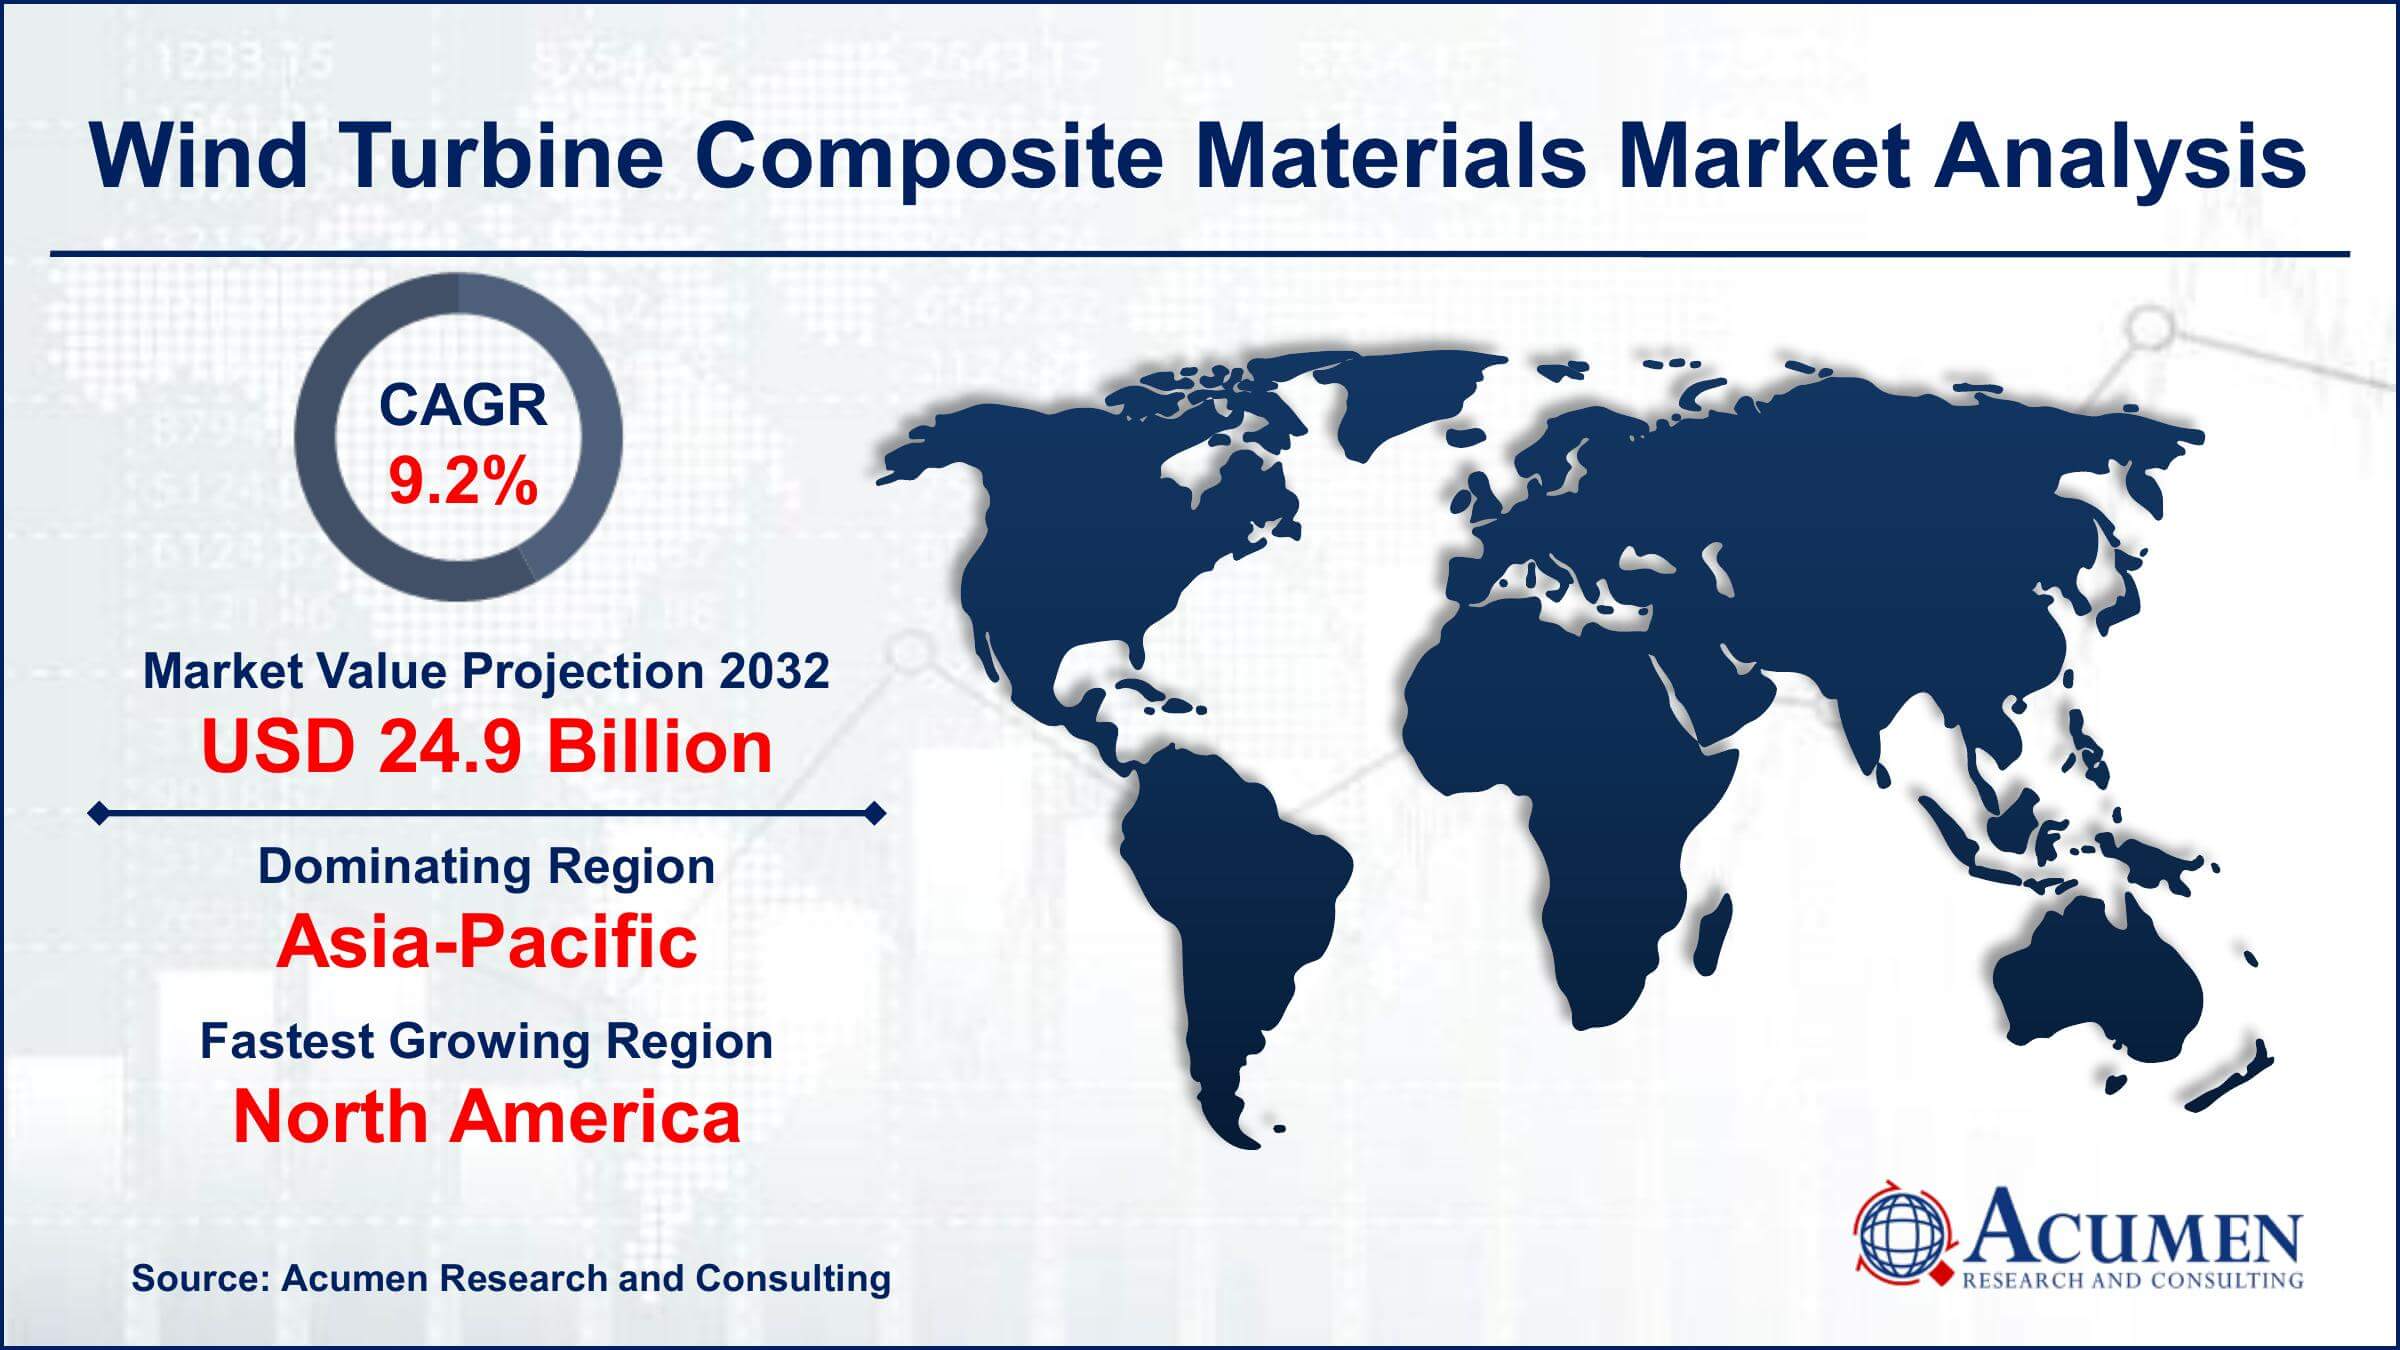 Global Wind Turbine Composite Materials Market Trends